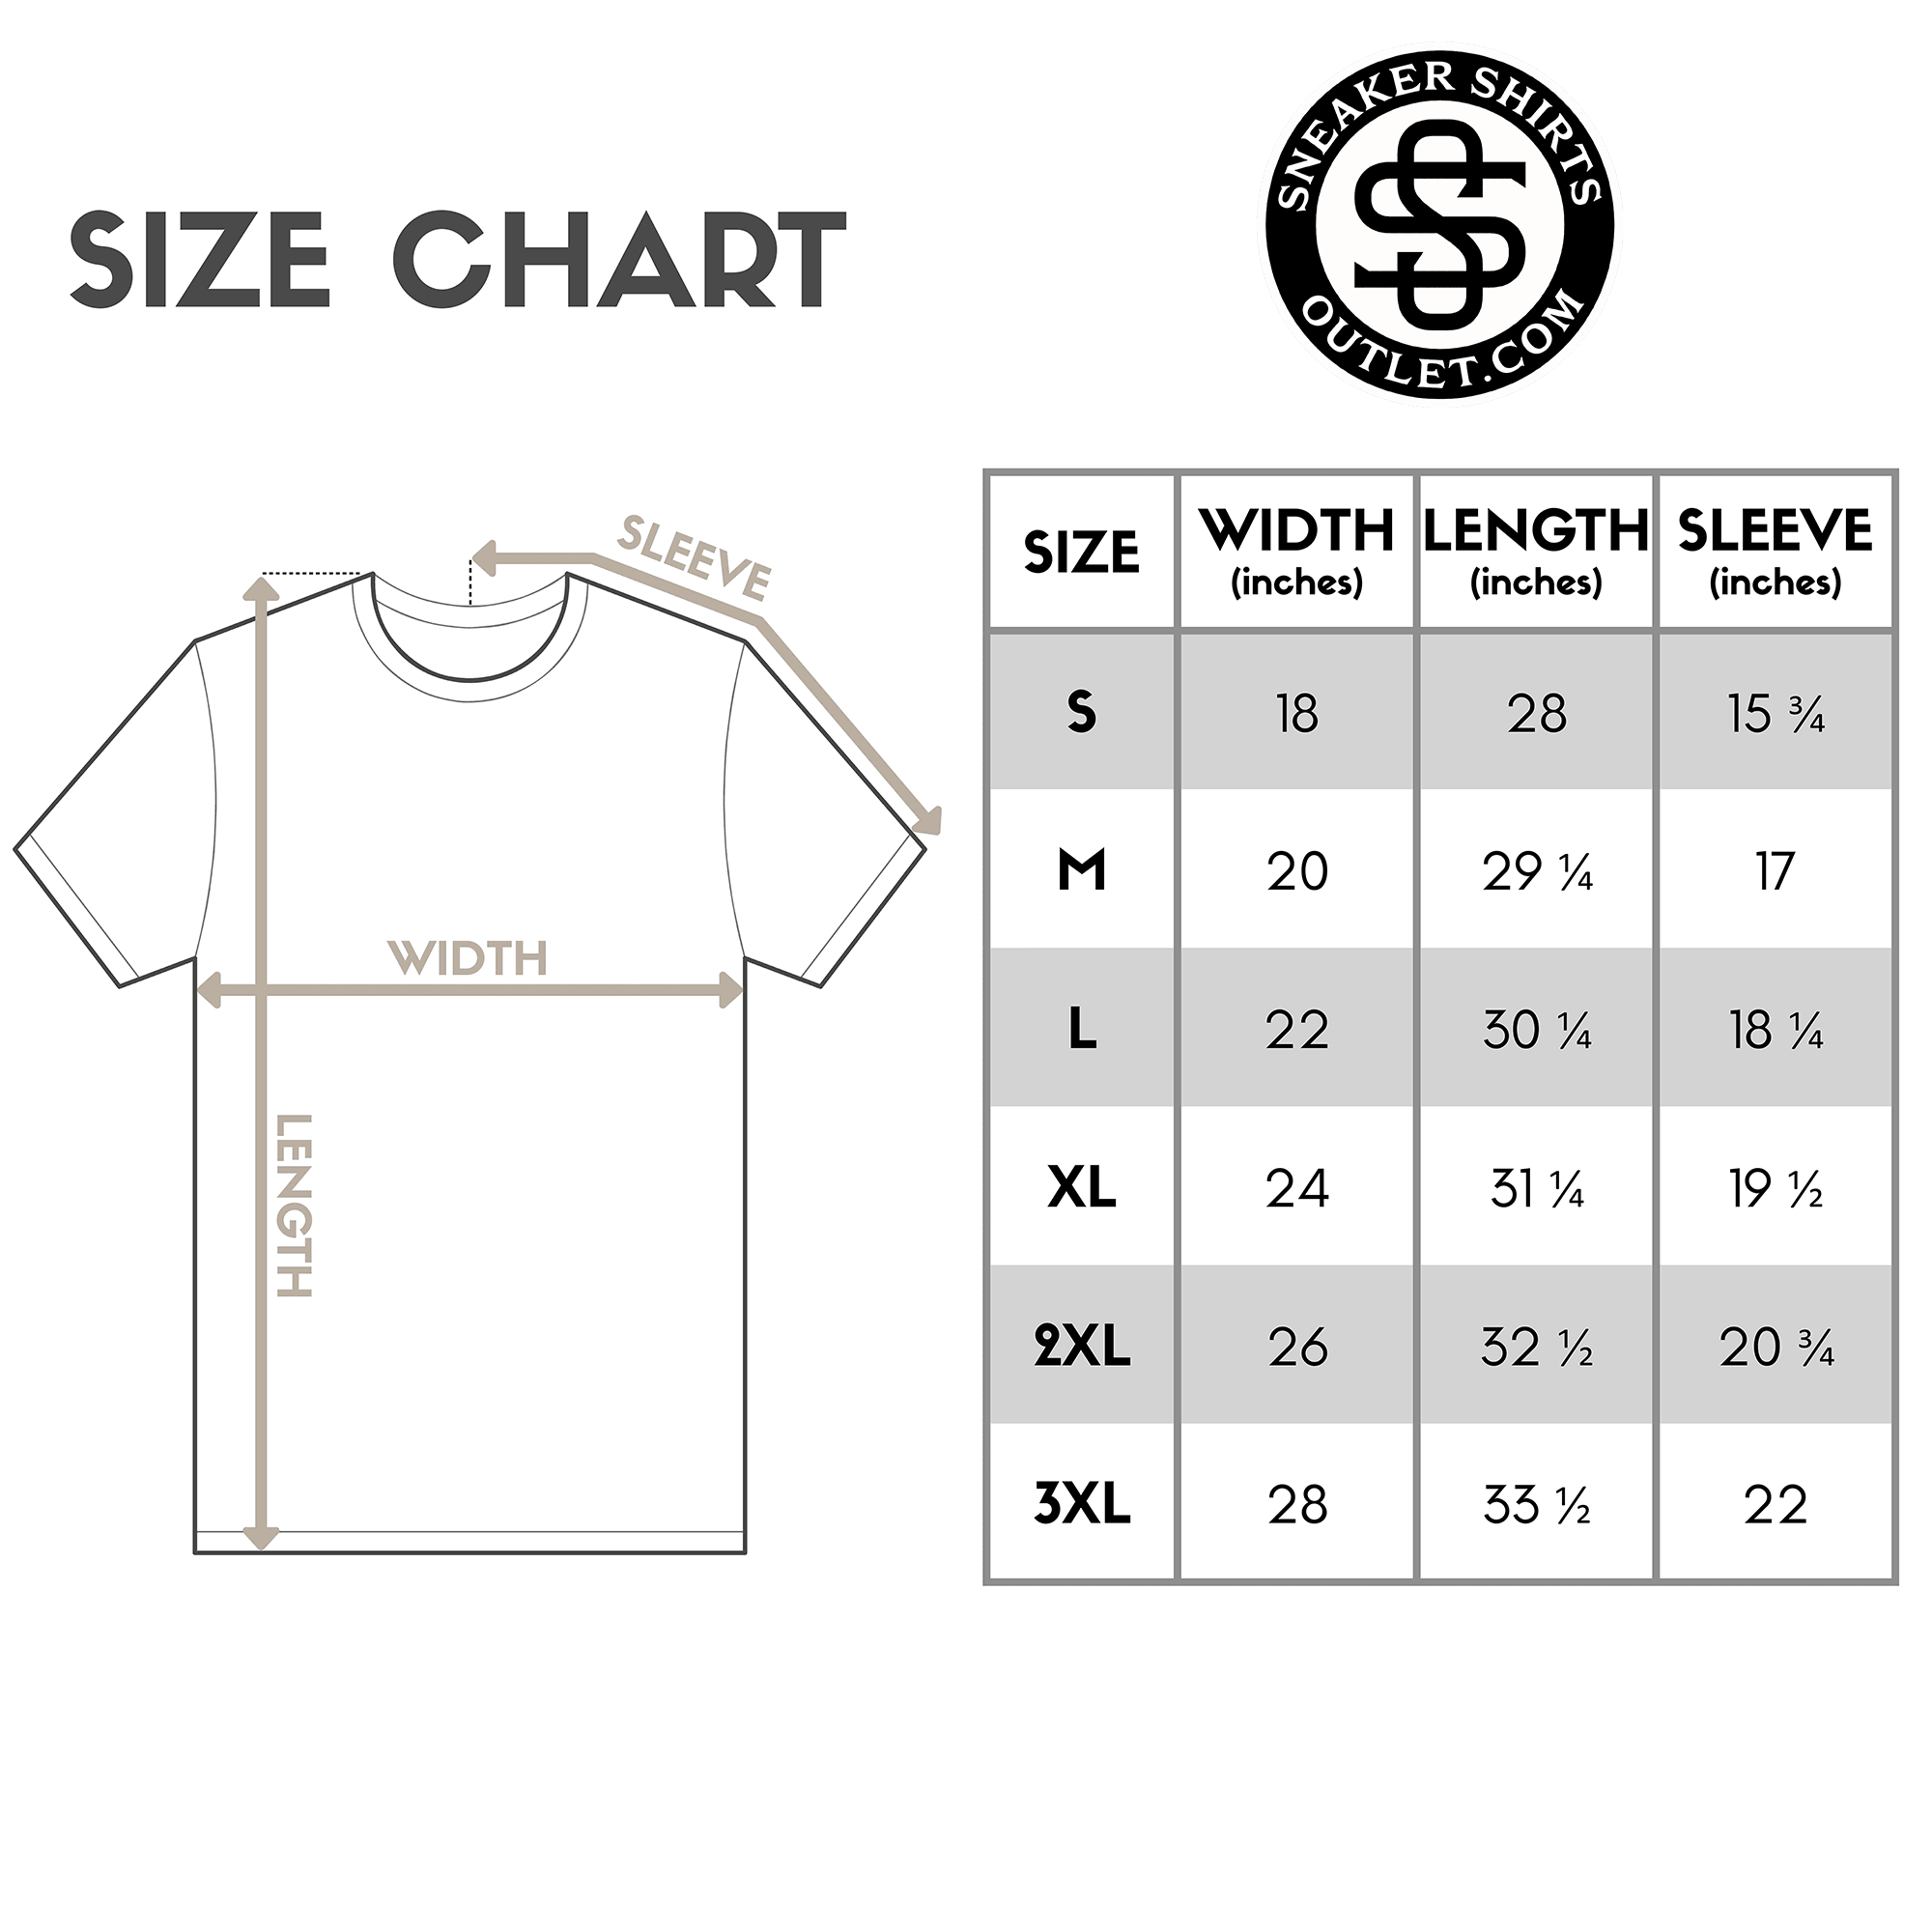 size chart for Stay True Shirt Jordan 14 Low Shocking Pink photo